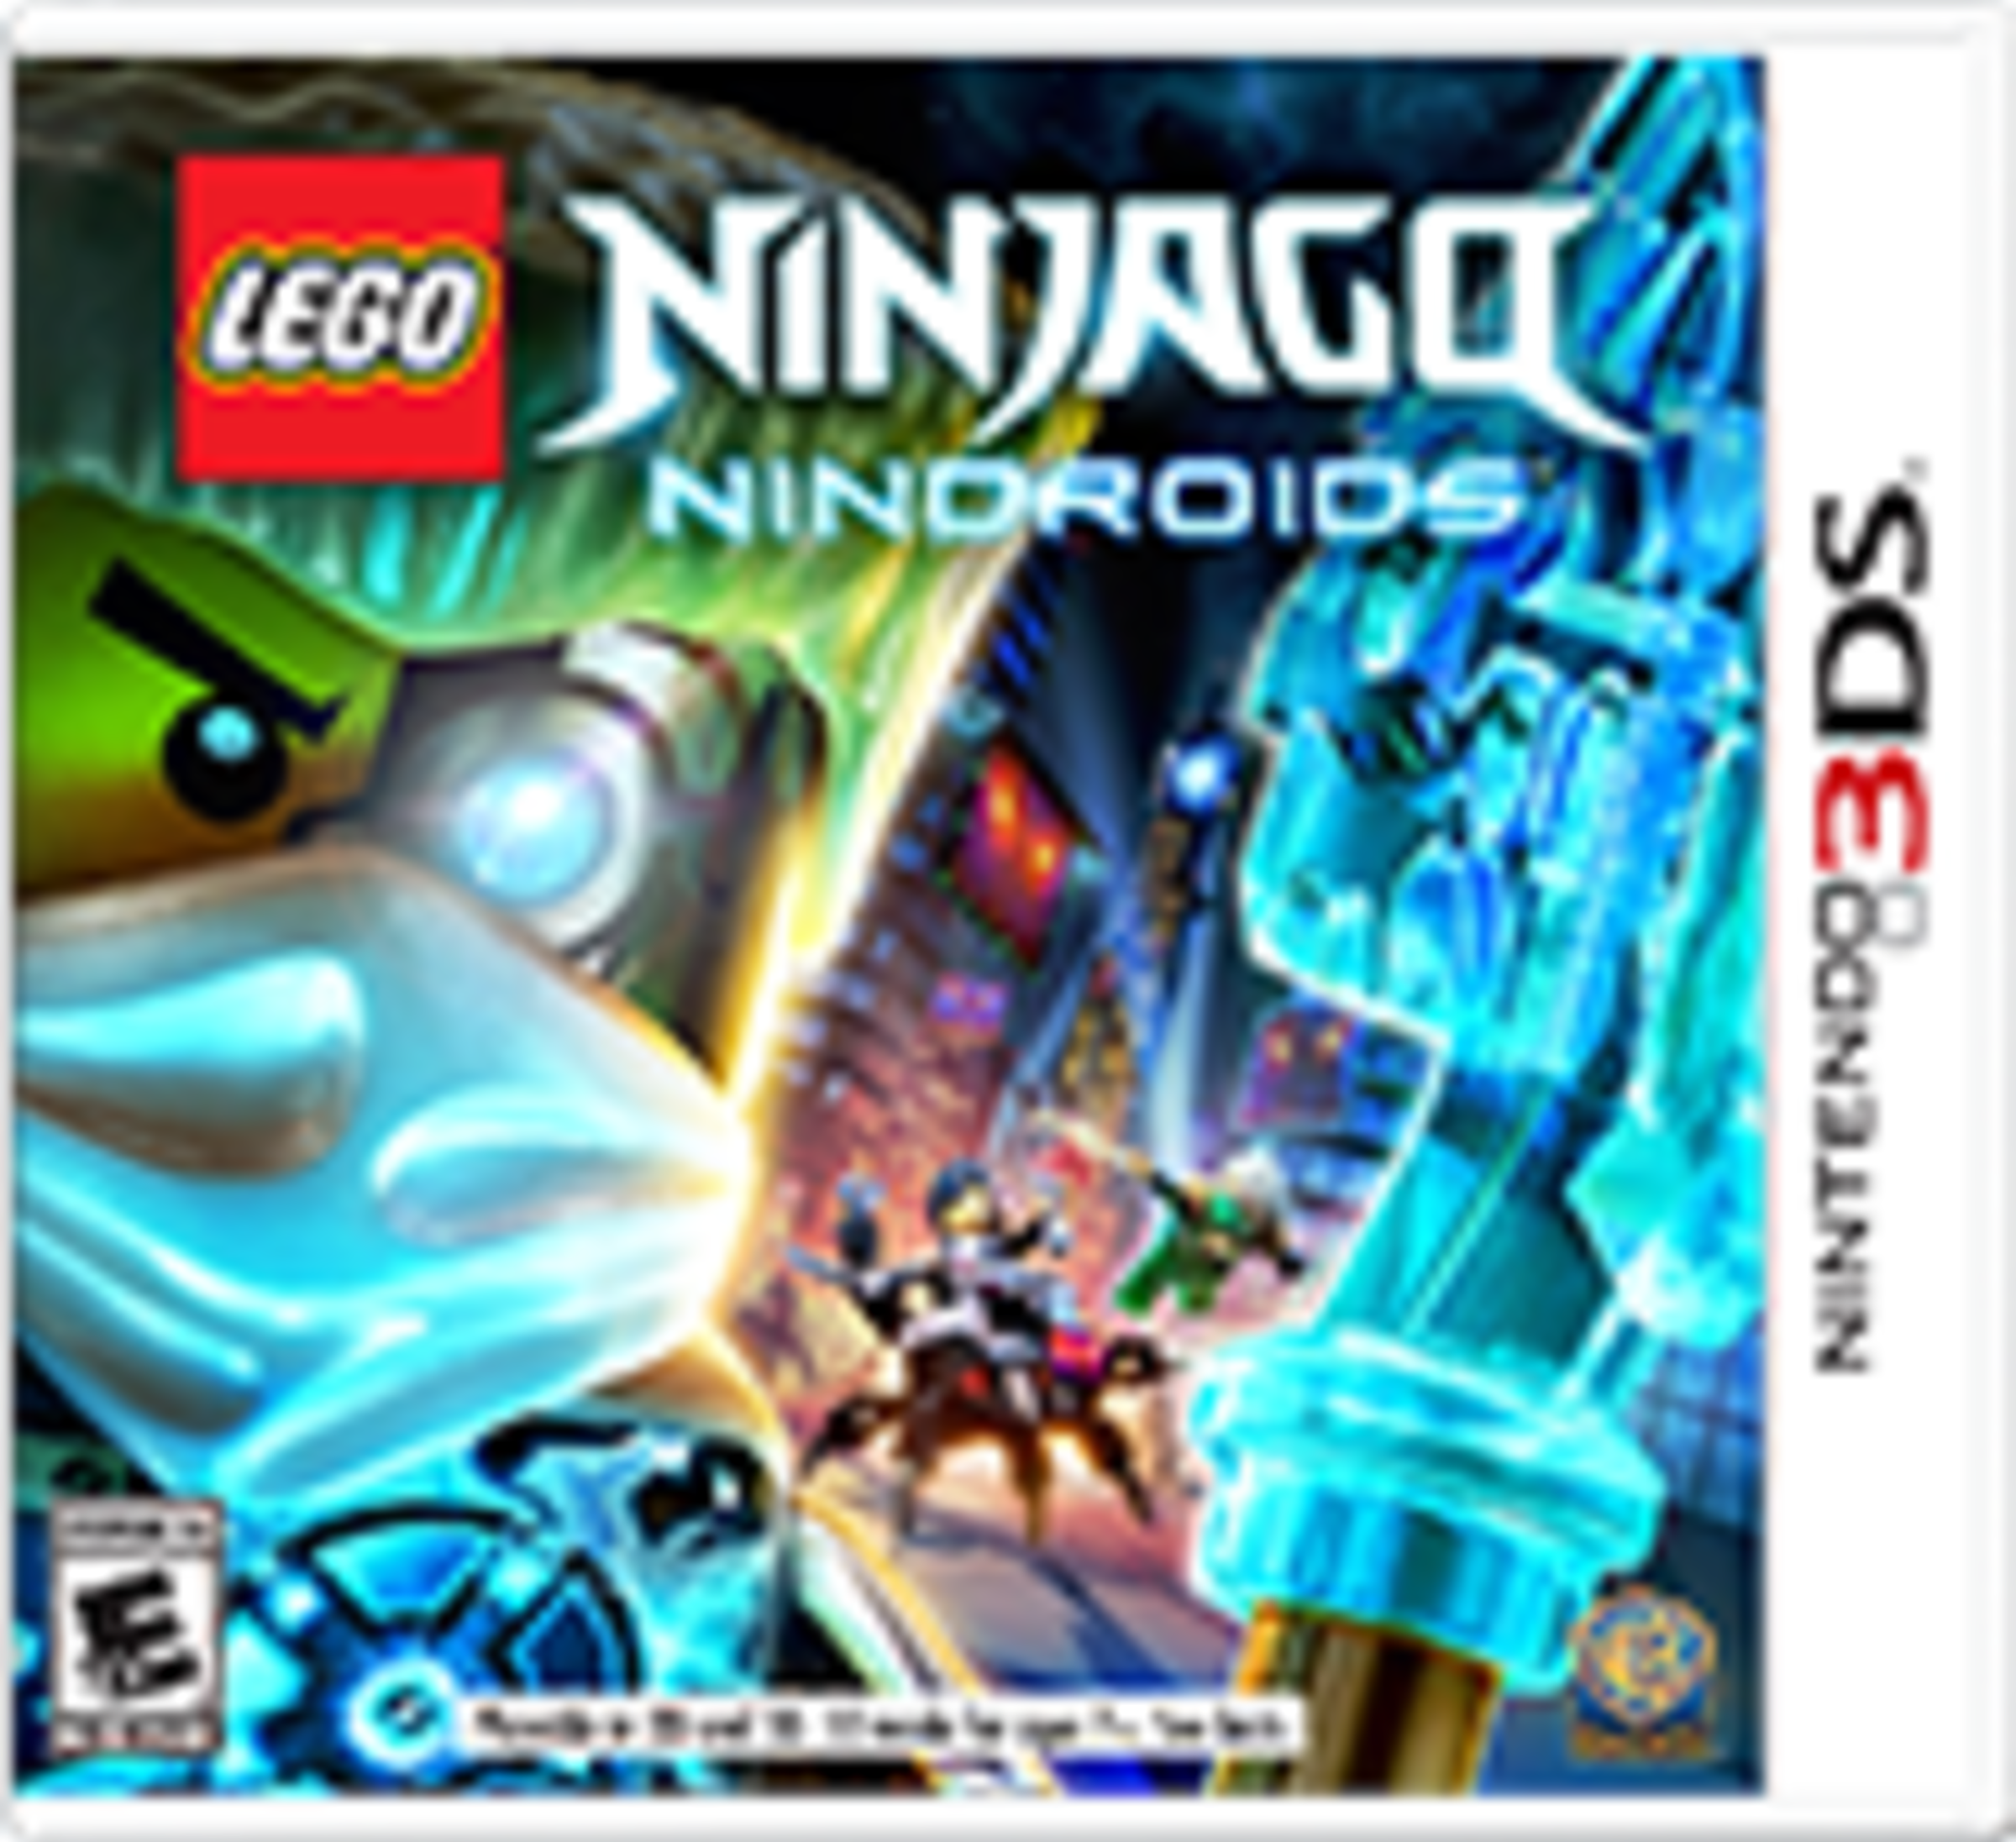 LEGO Ninjago: Nindroids for Nintendo 3DS Nintendo Official Site